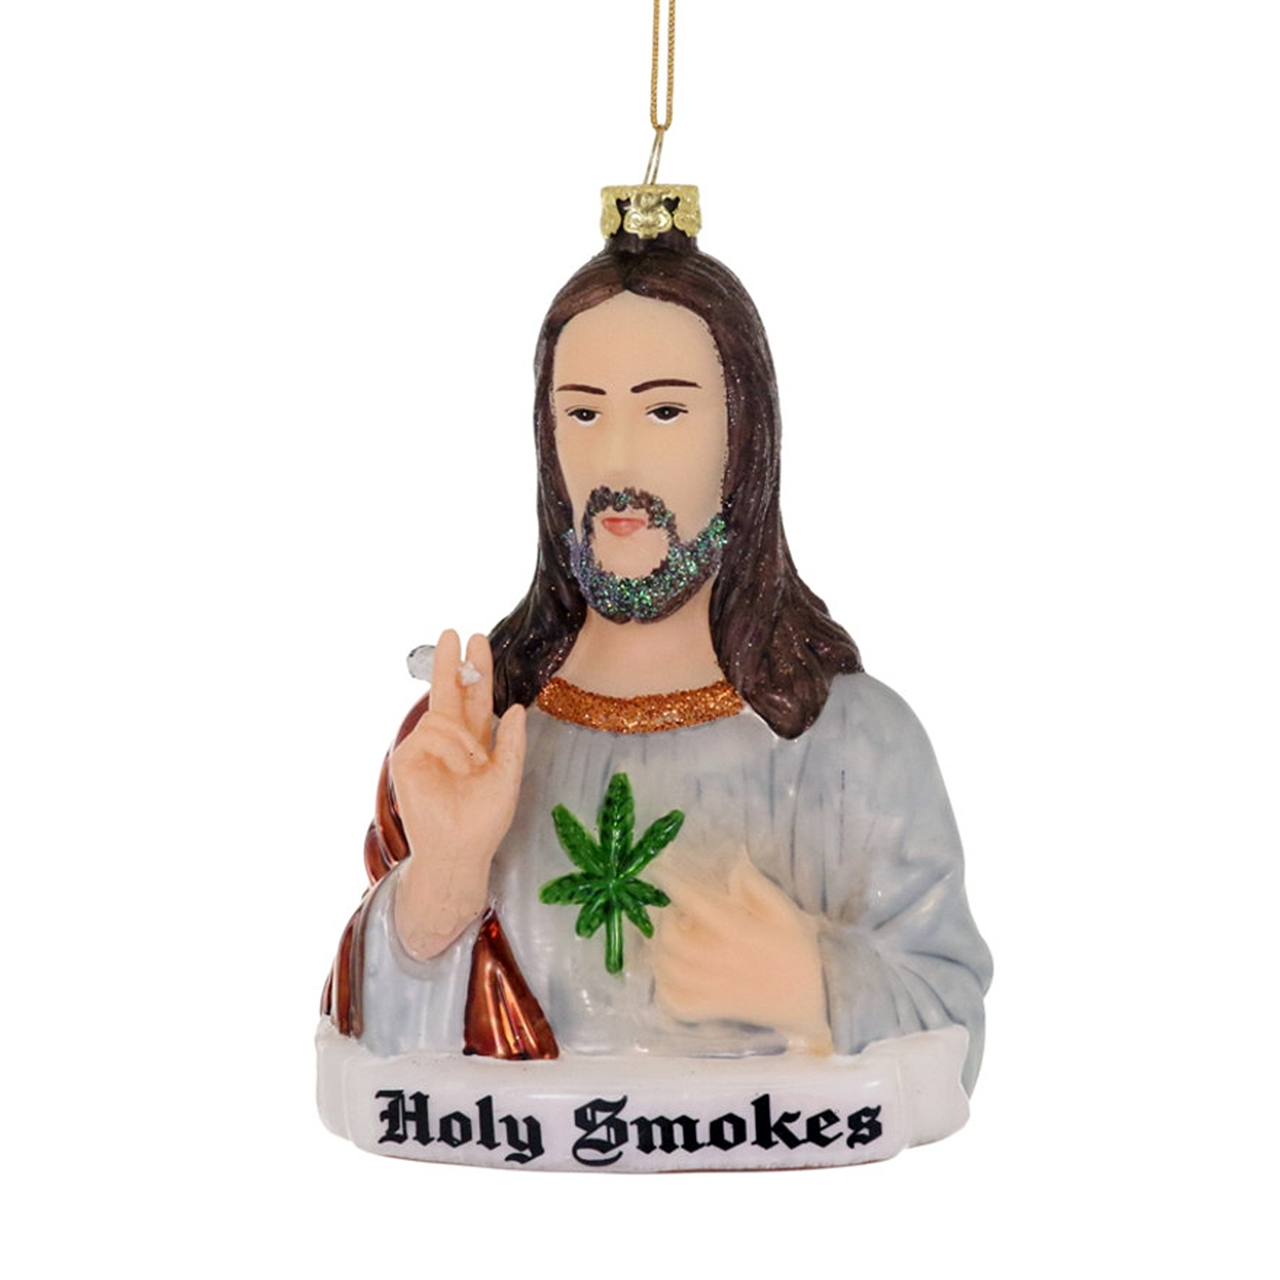 HOLY SMOKES GLASS ORNAMENT